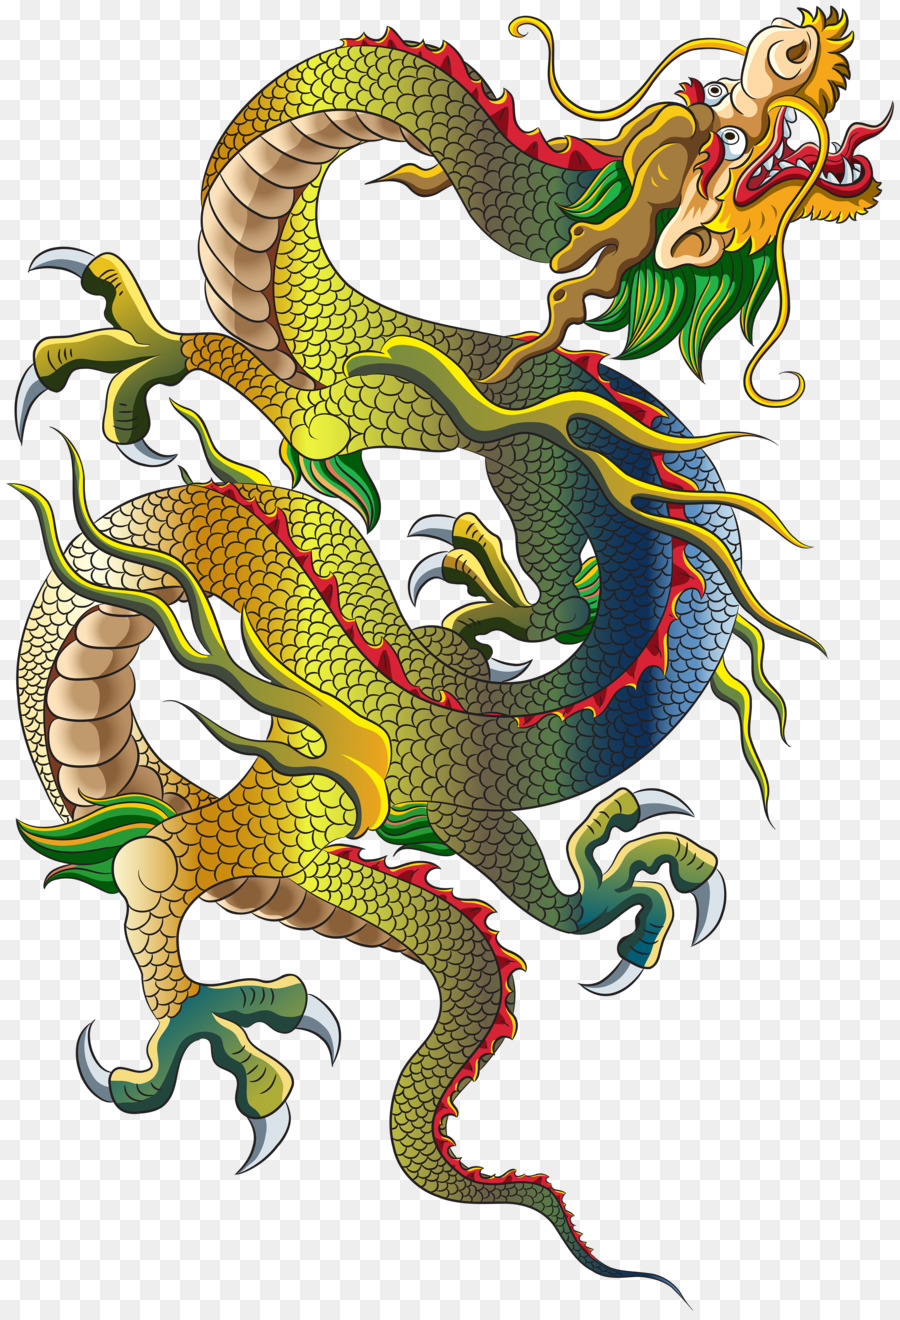 China Chinese dragon Painting - China png download - 3411*5000 - Free Transparent China png Download.